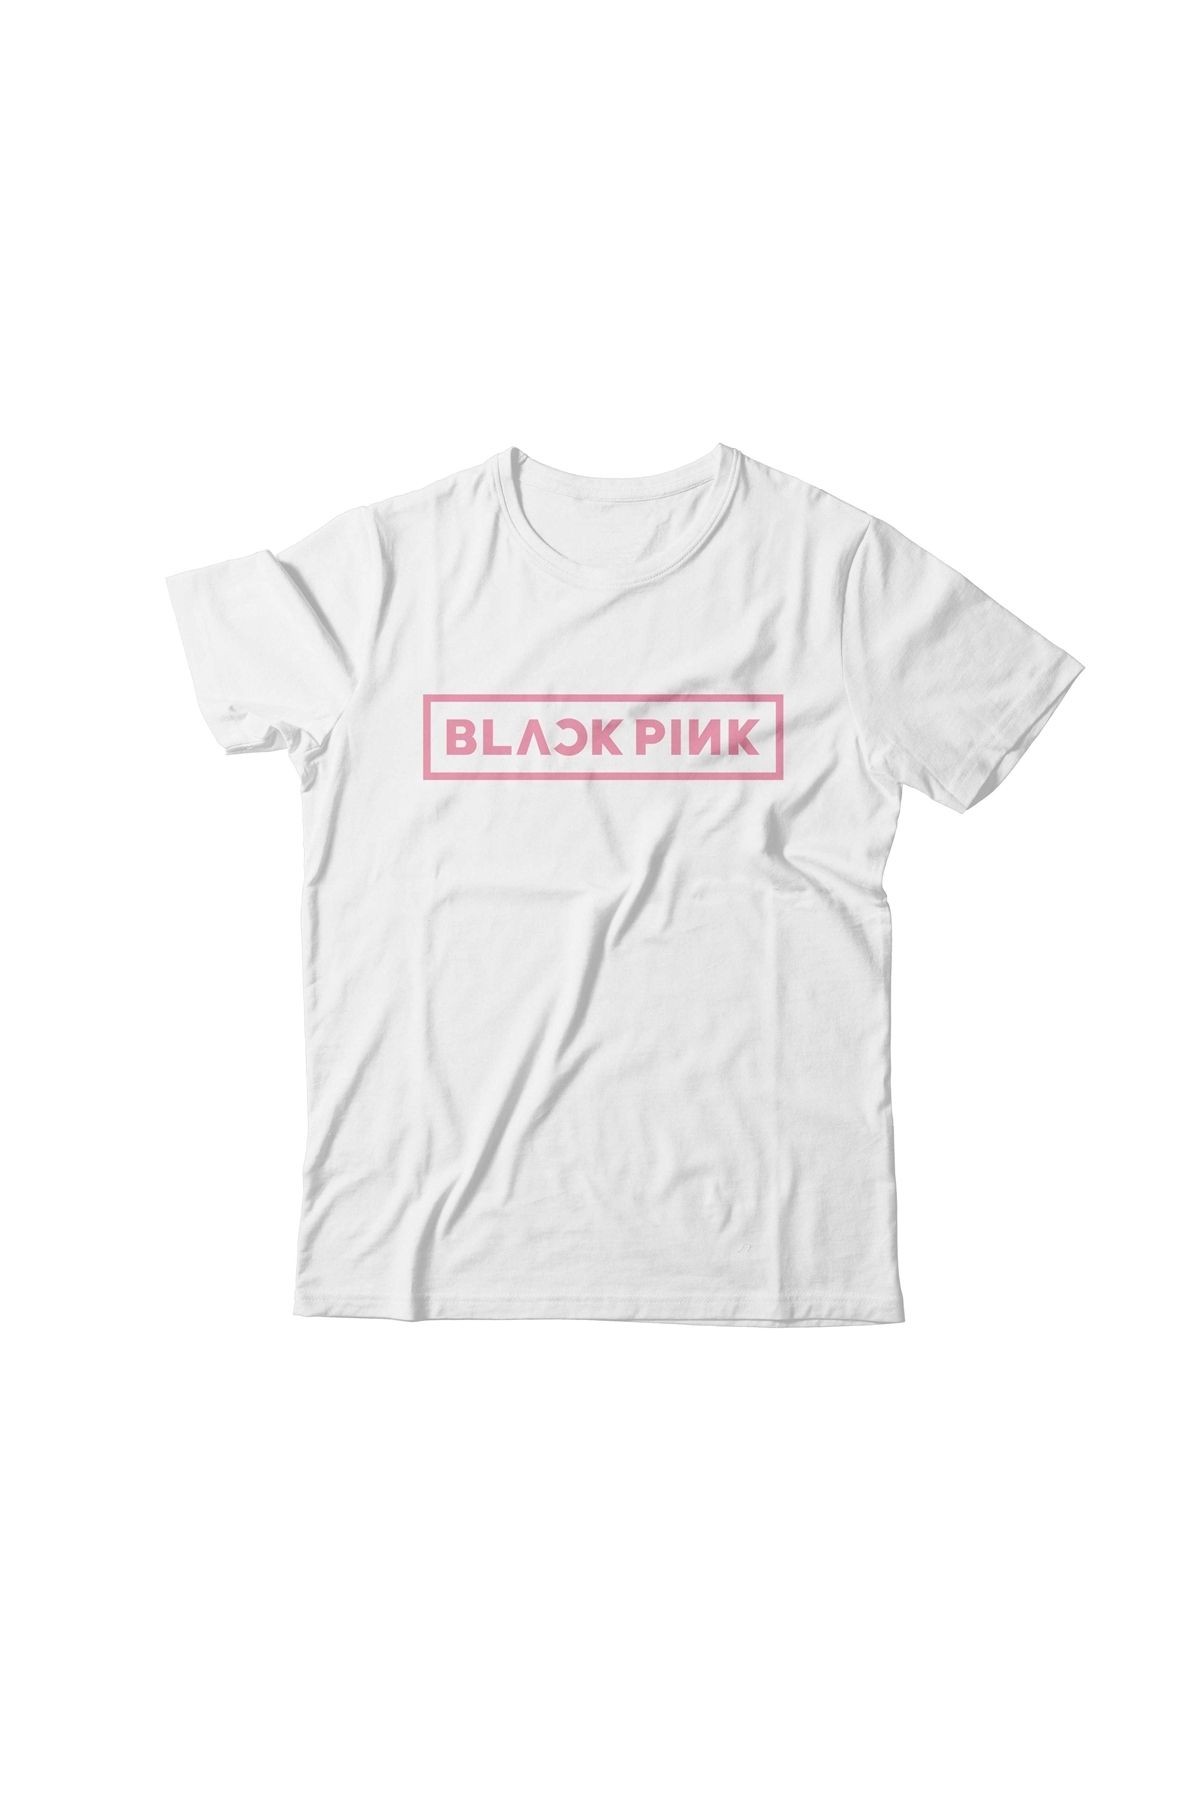 Alfa Tshirt Blackpink Çocuk Beyaz Tişört